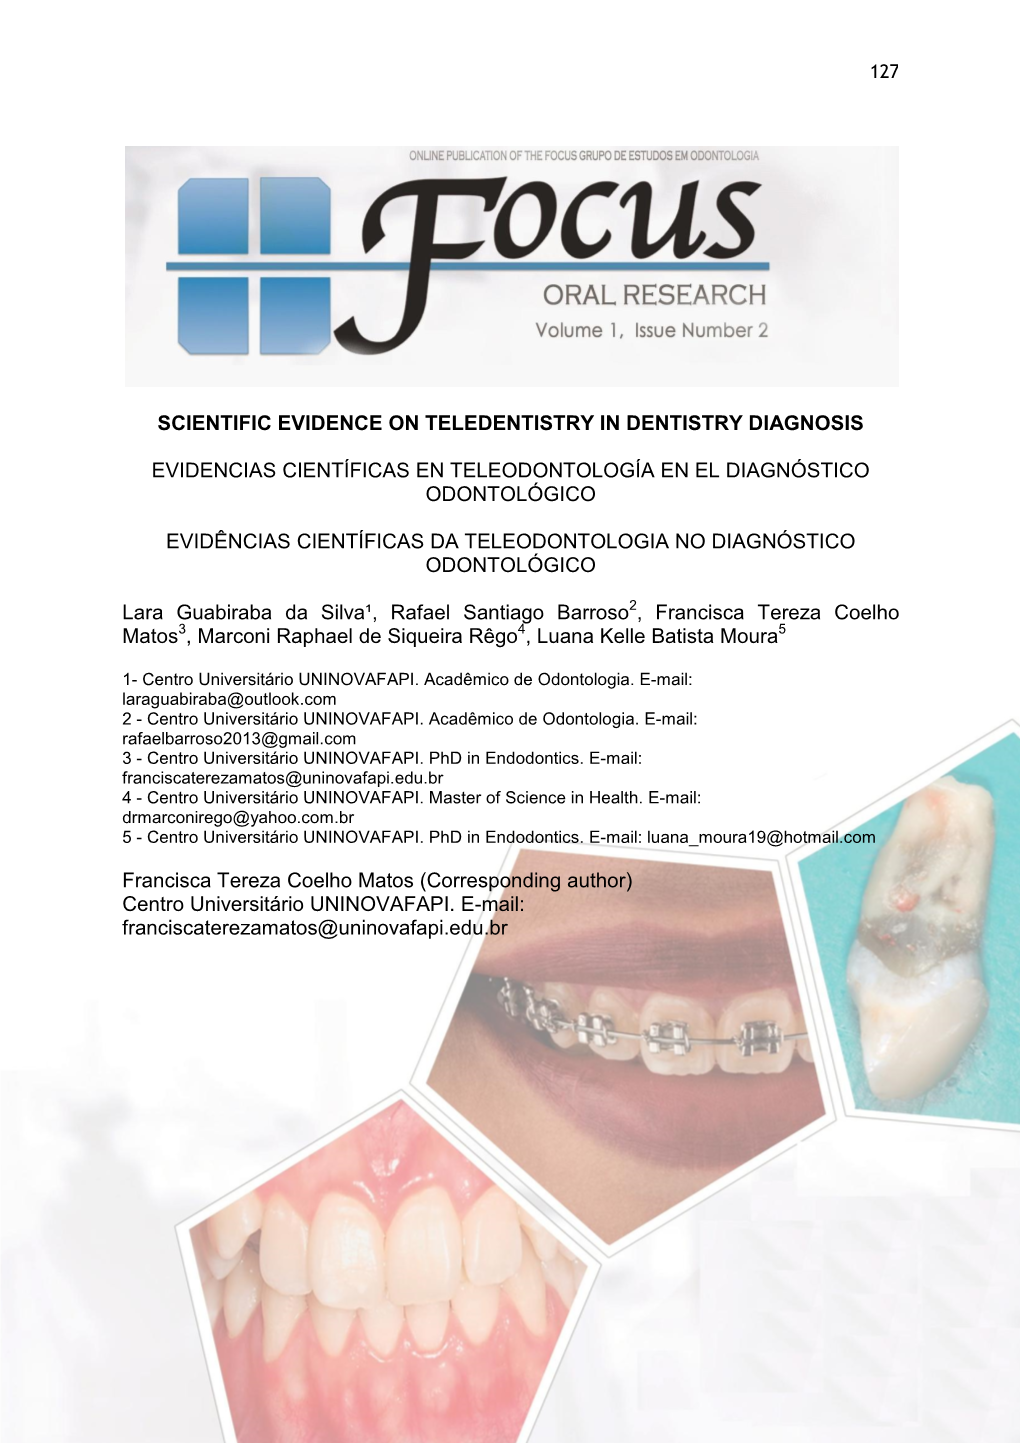 Scientific Evidence on Teledentistry in Dentistry Diagnosis